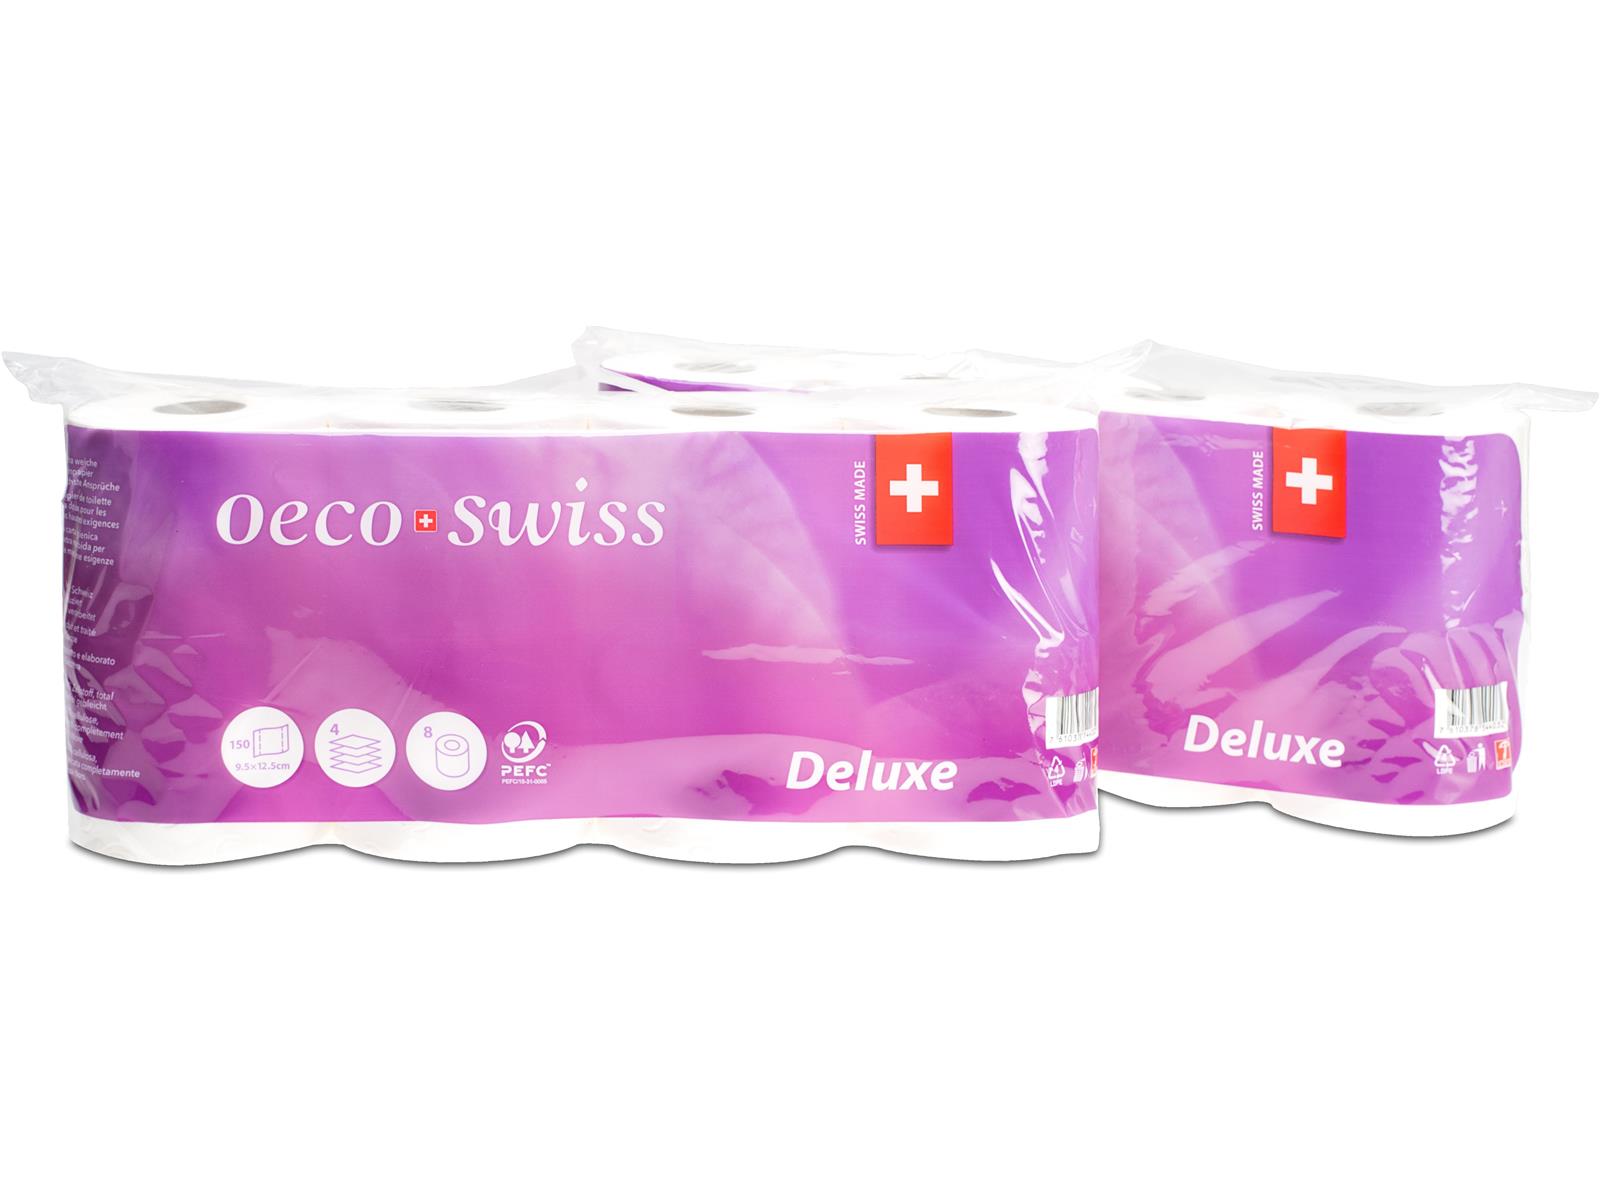 Toilettenpapier Oeco Swiss Deluxe 4-lagig - 1 Pack